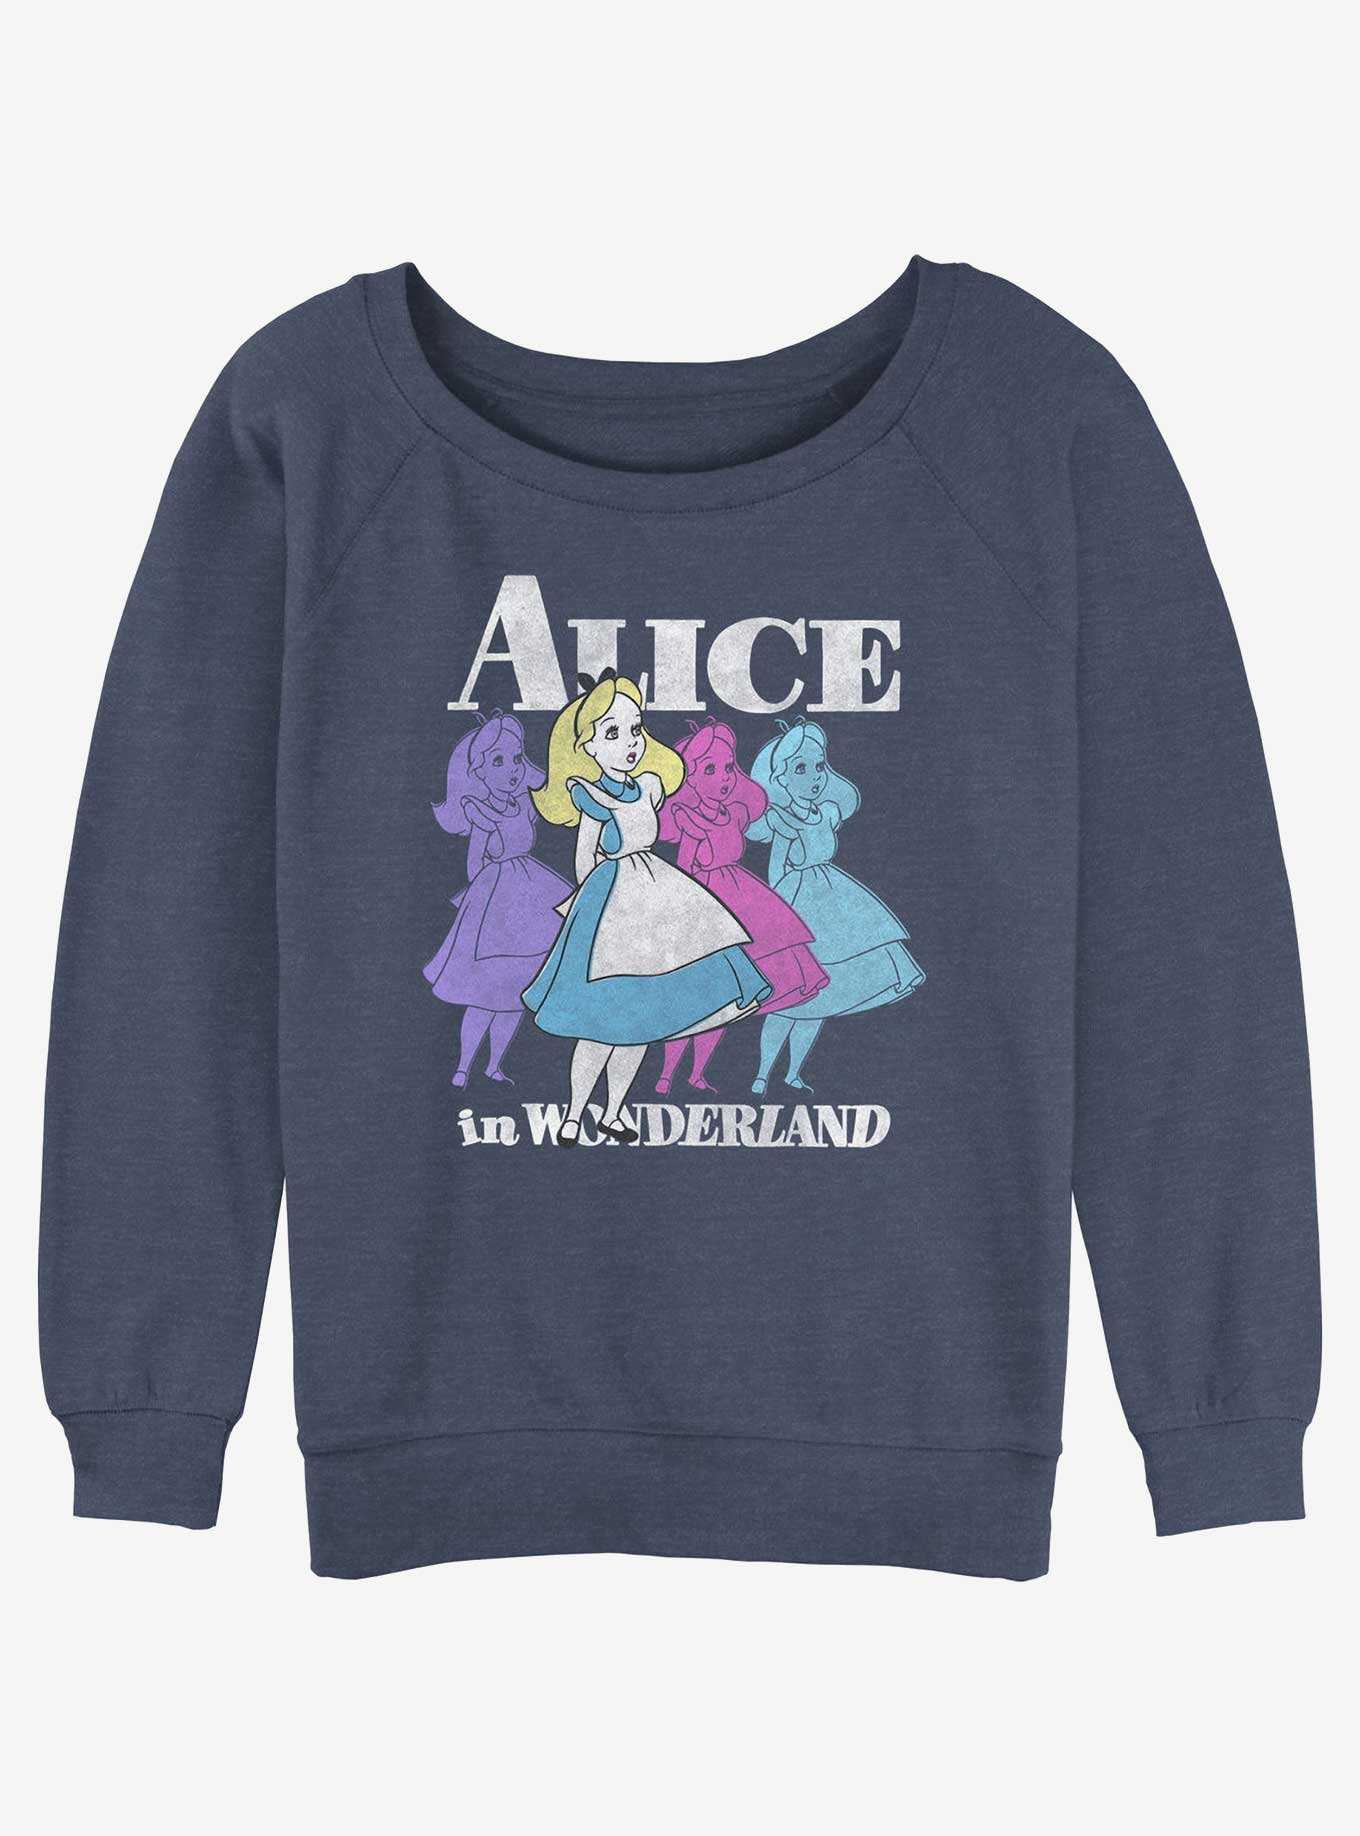 Disney Alice in Wonderland Trippy Alice Girls Slouchy Sweatshirt, , hi-res